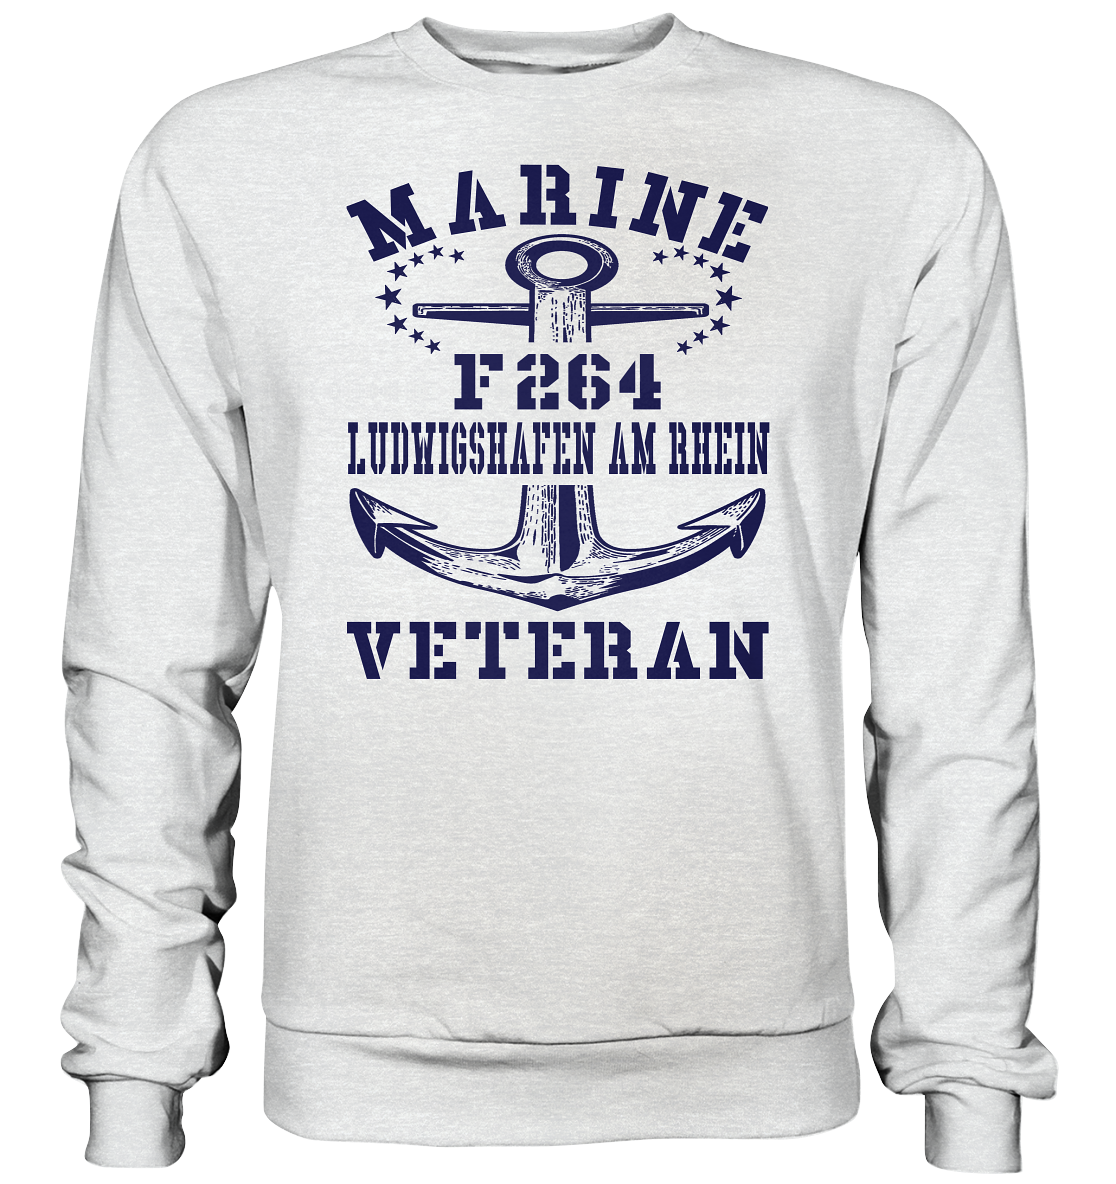 Korvette F264 LUDWIGSHAFEN AM RHEIN Marine Veteran - Premium Sweatshirt